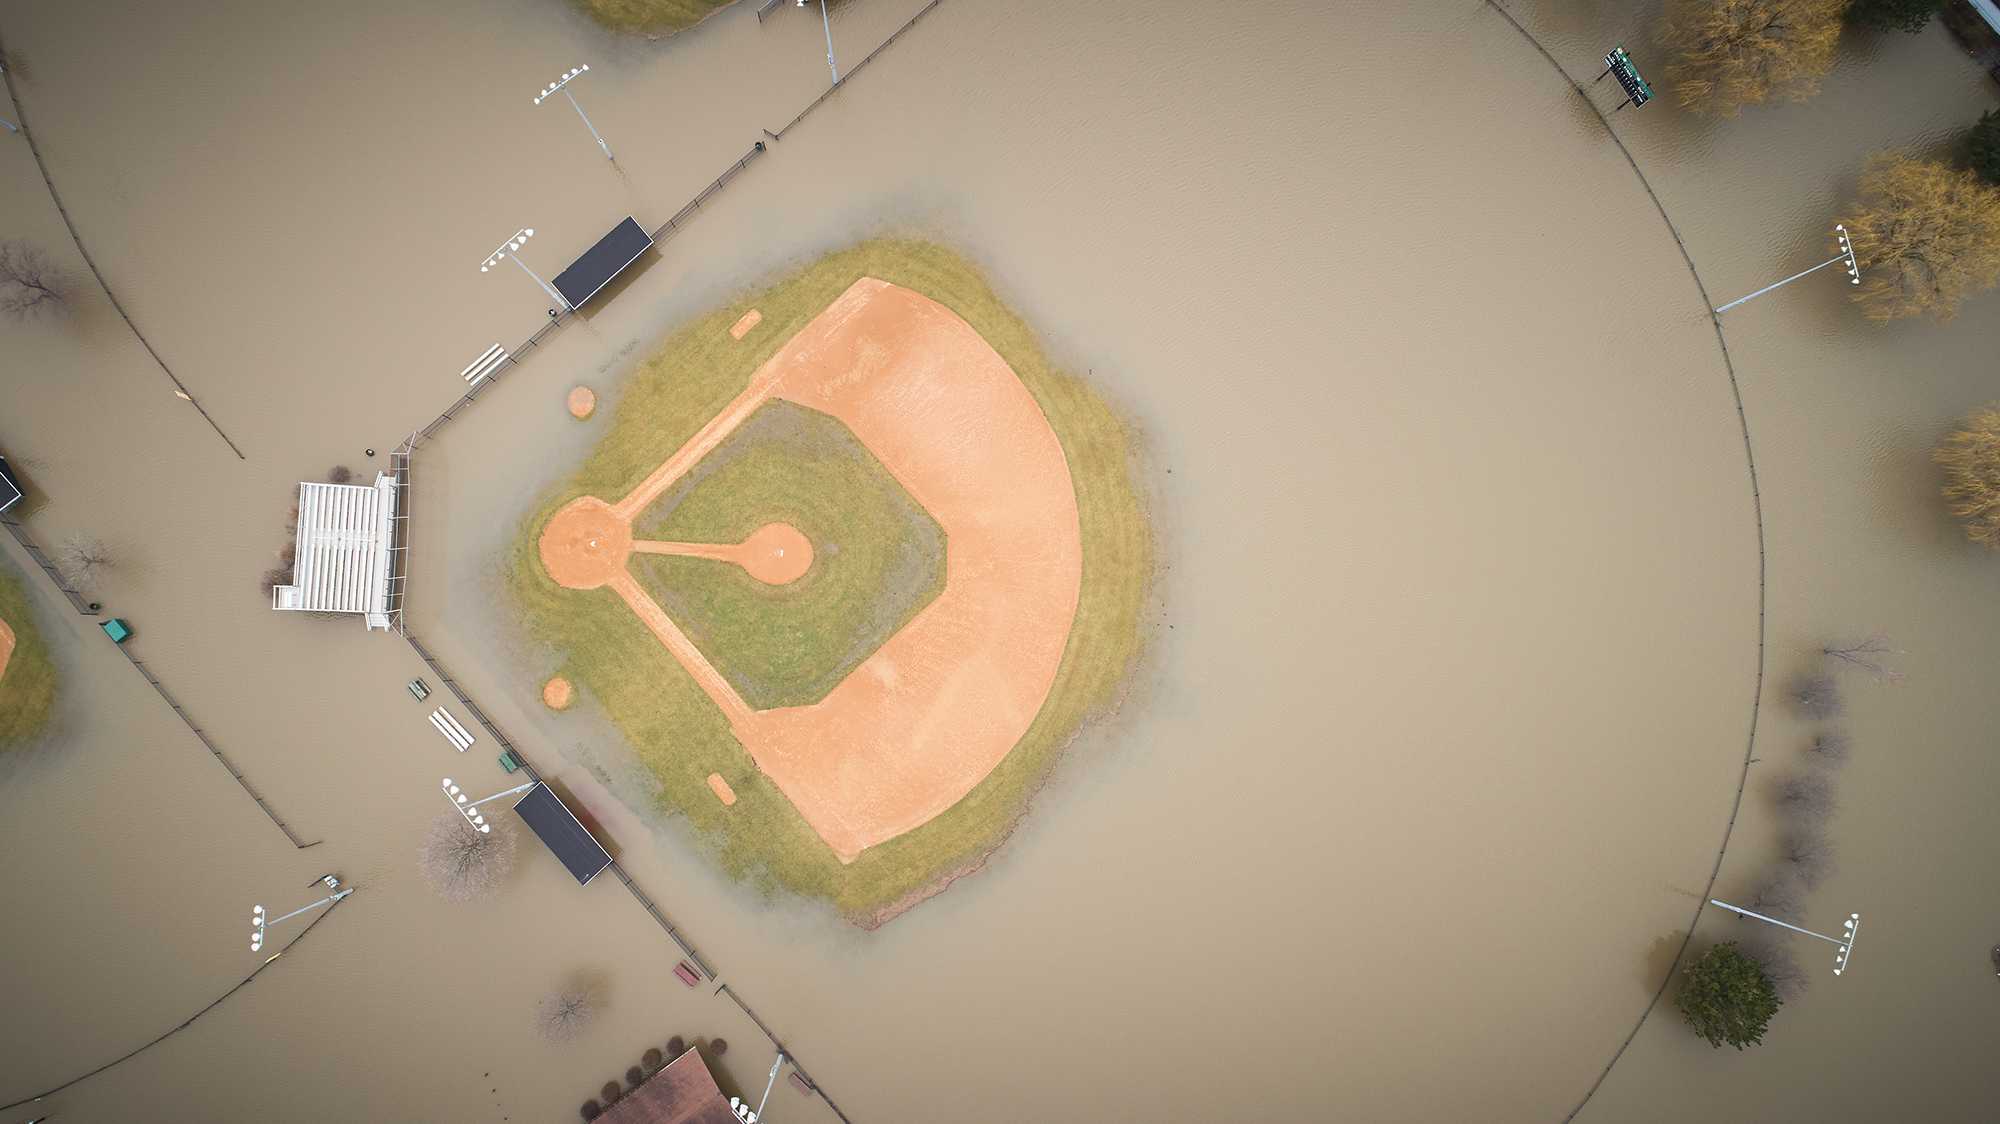 Flooded baseball diamond from above.